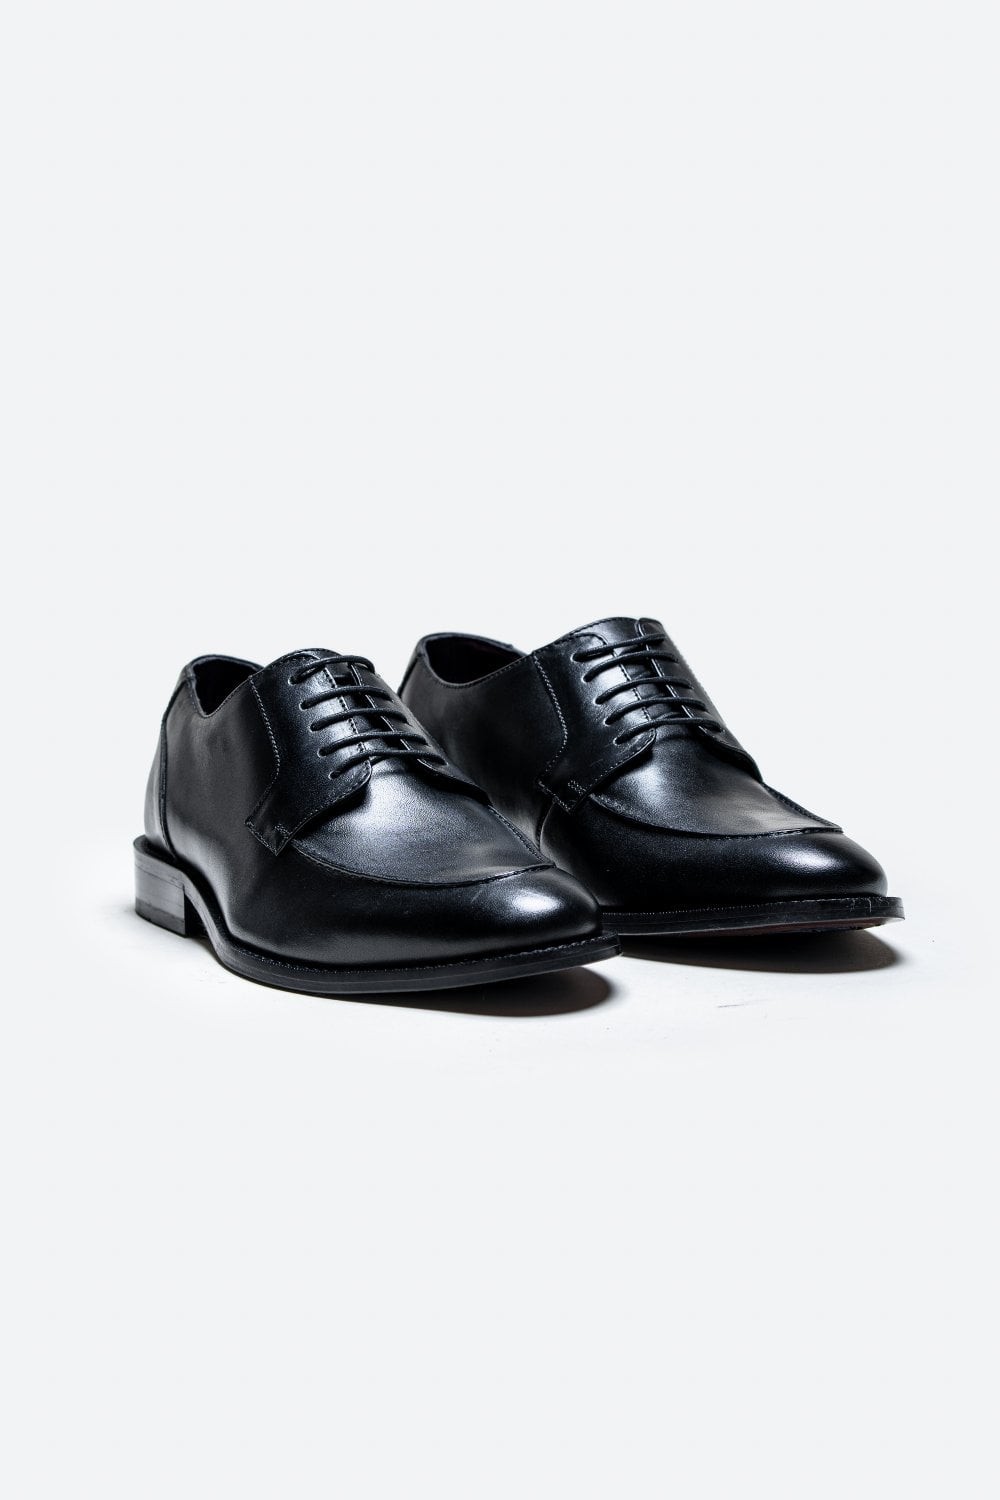 Men's Derby Lace Up Formal Shoes -BERLIN - Black